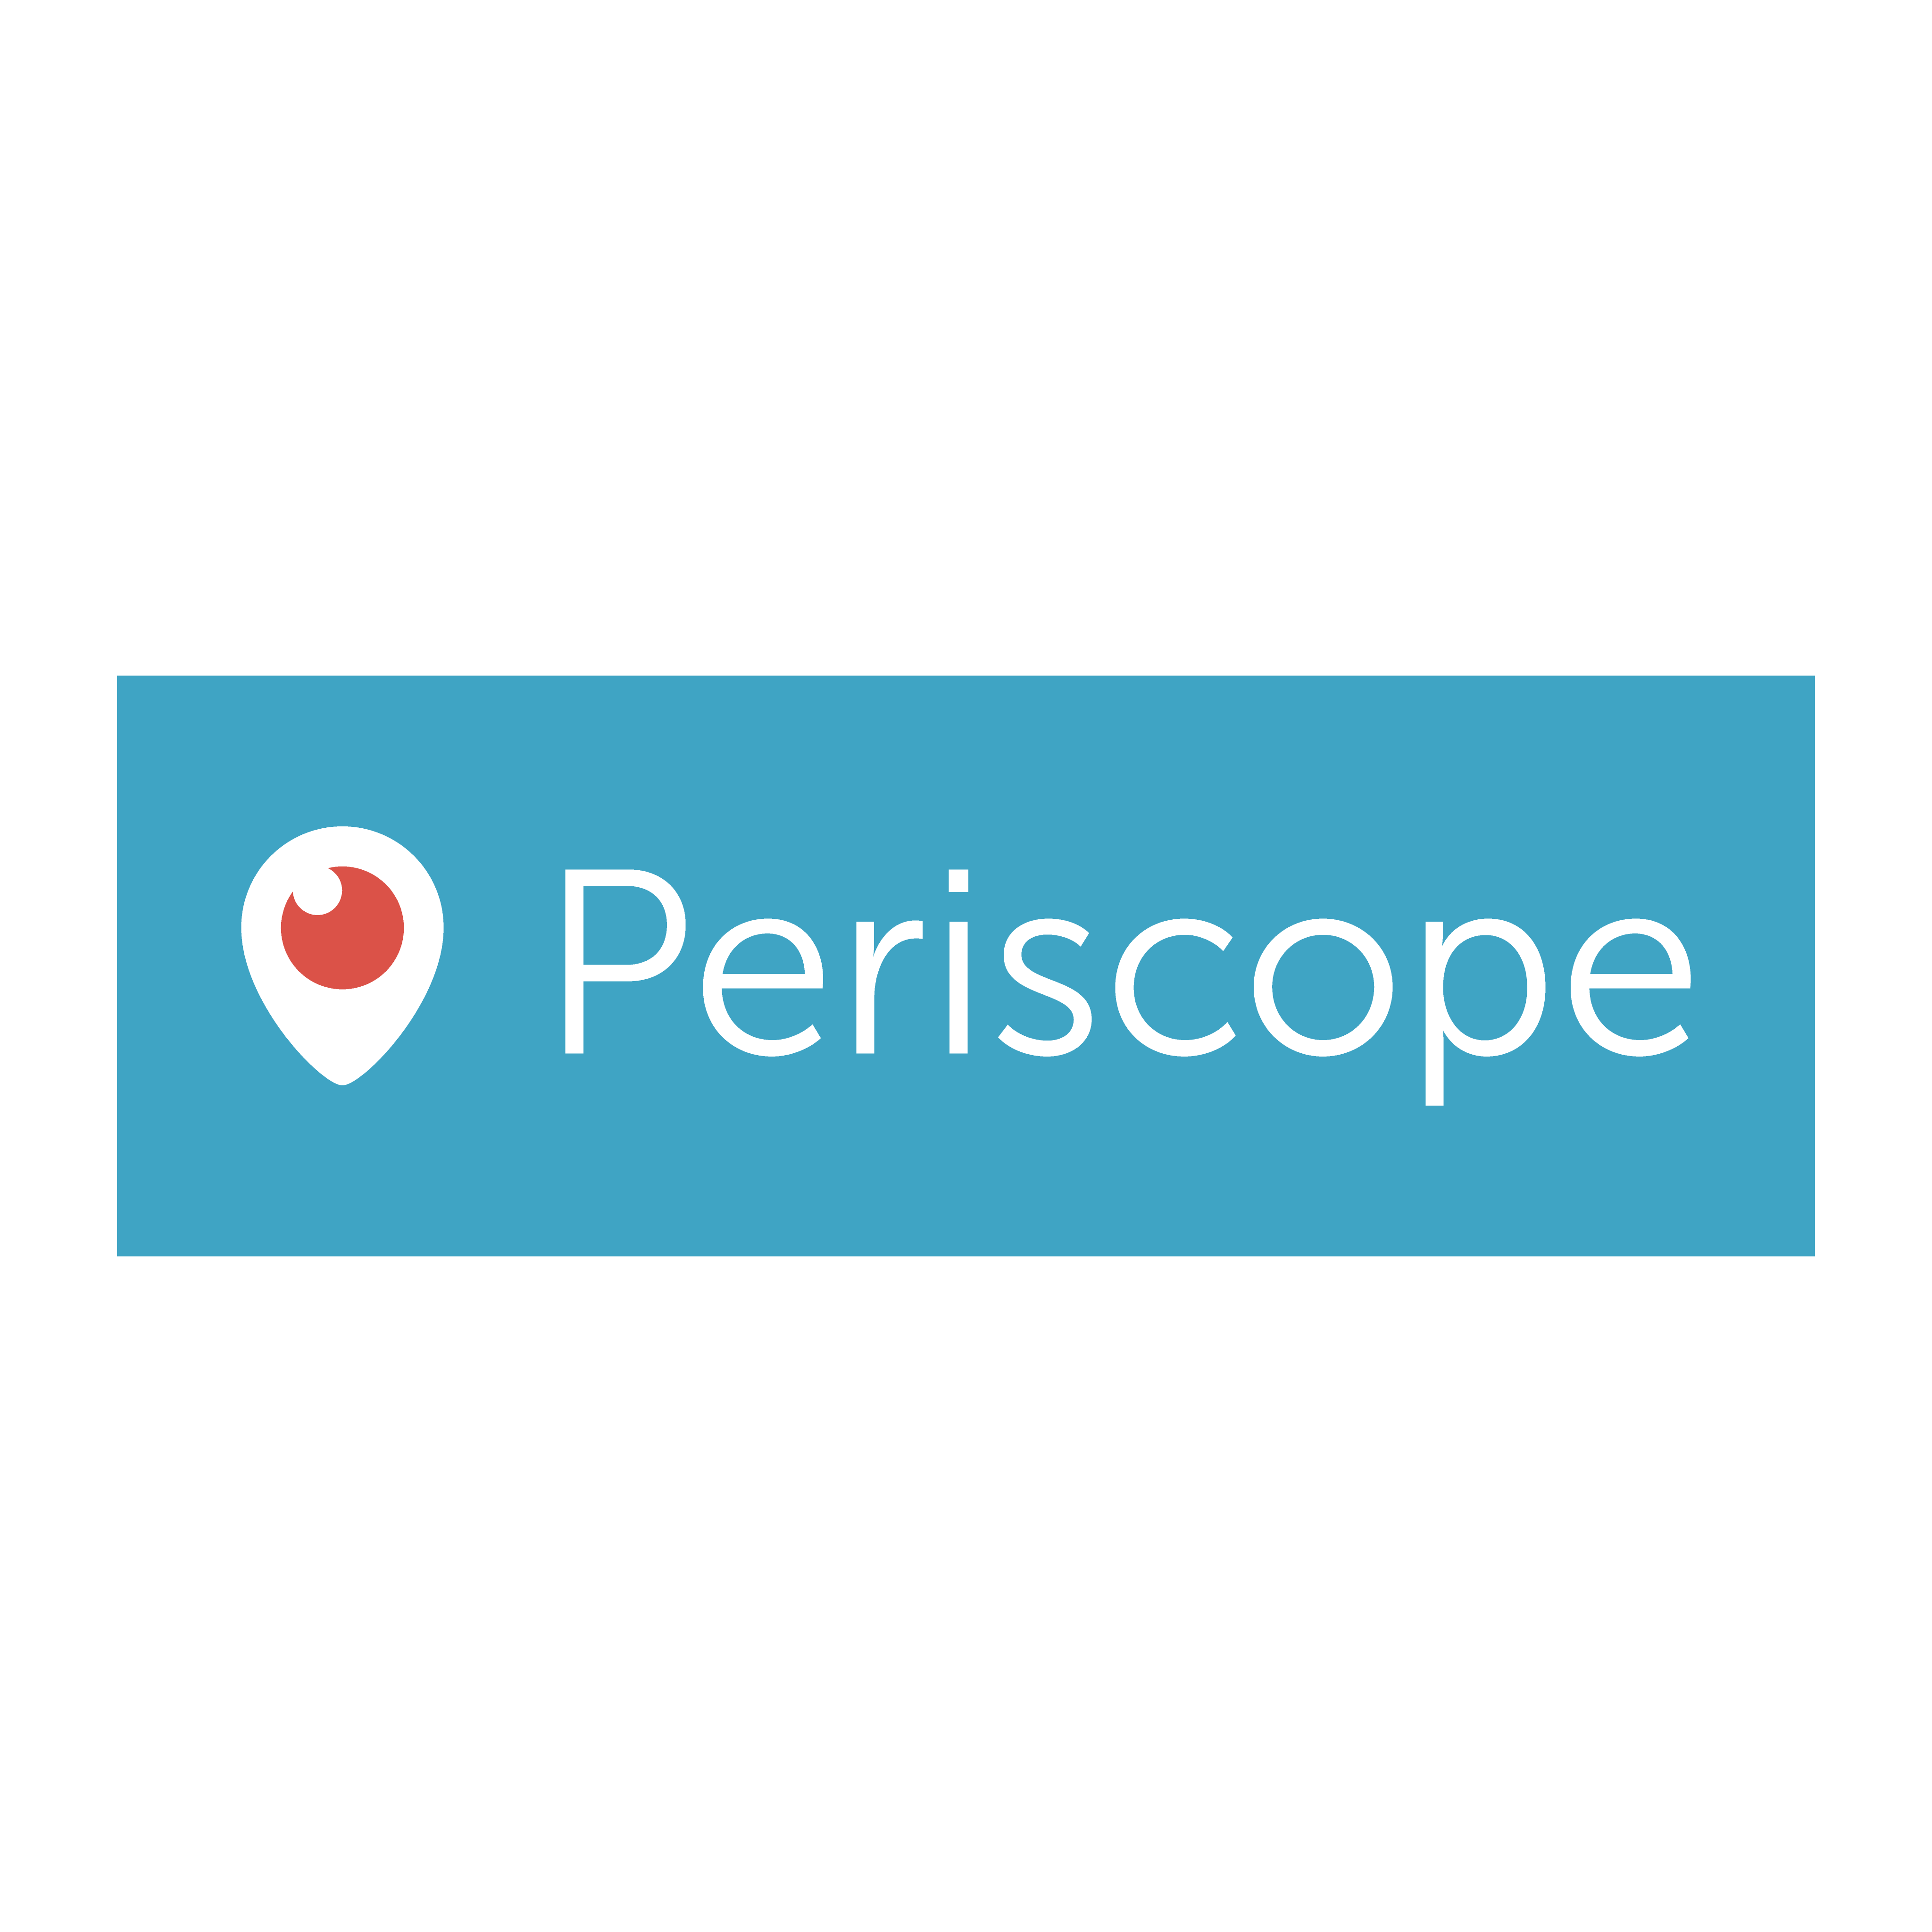 logo periscope